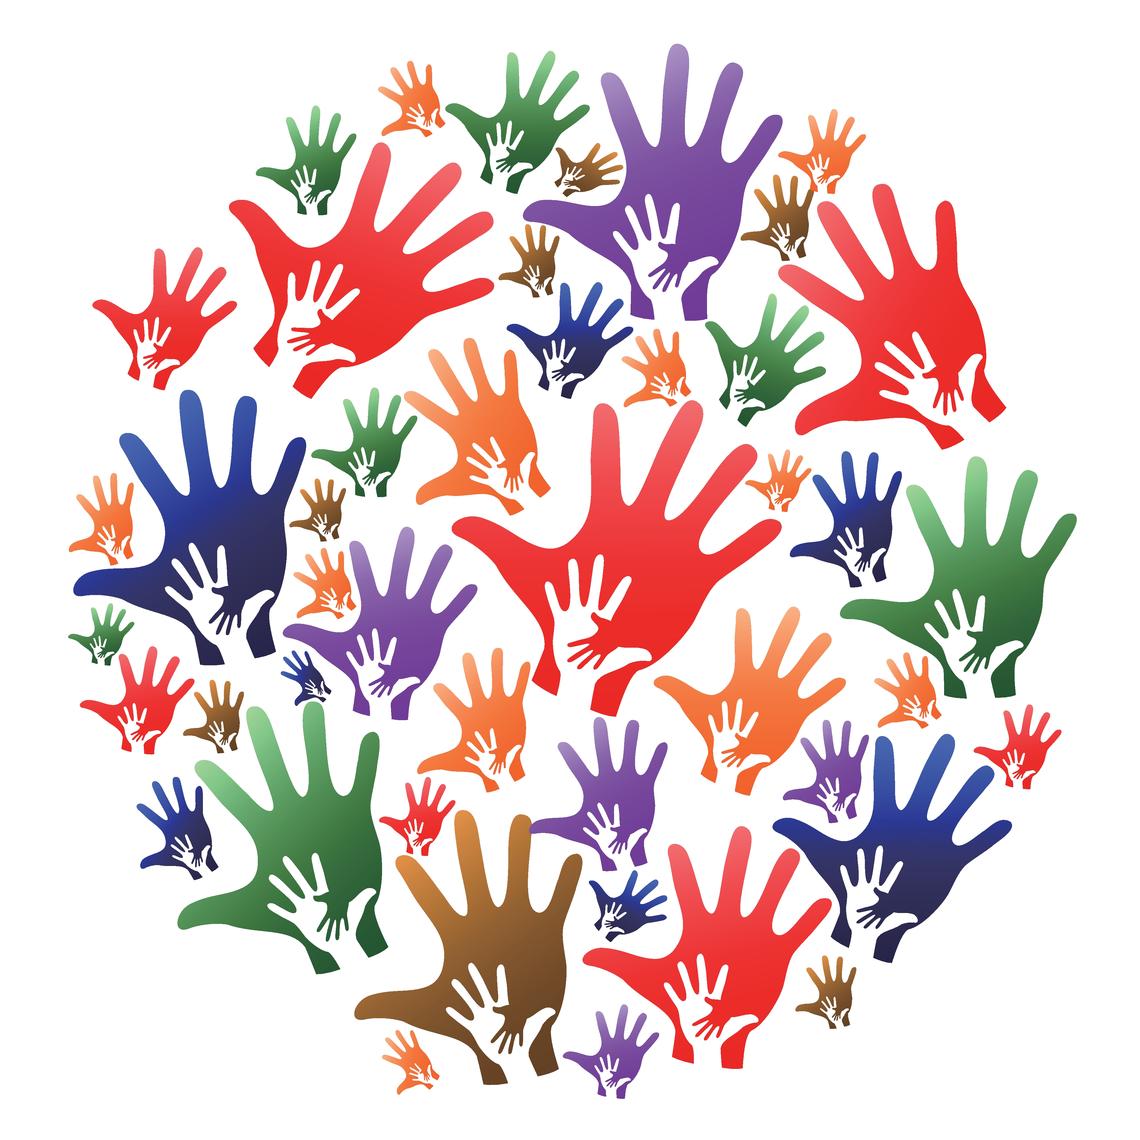 illustration of many hands